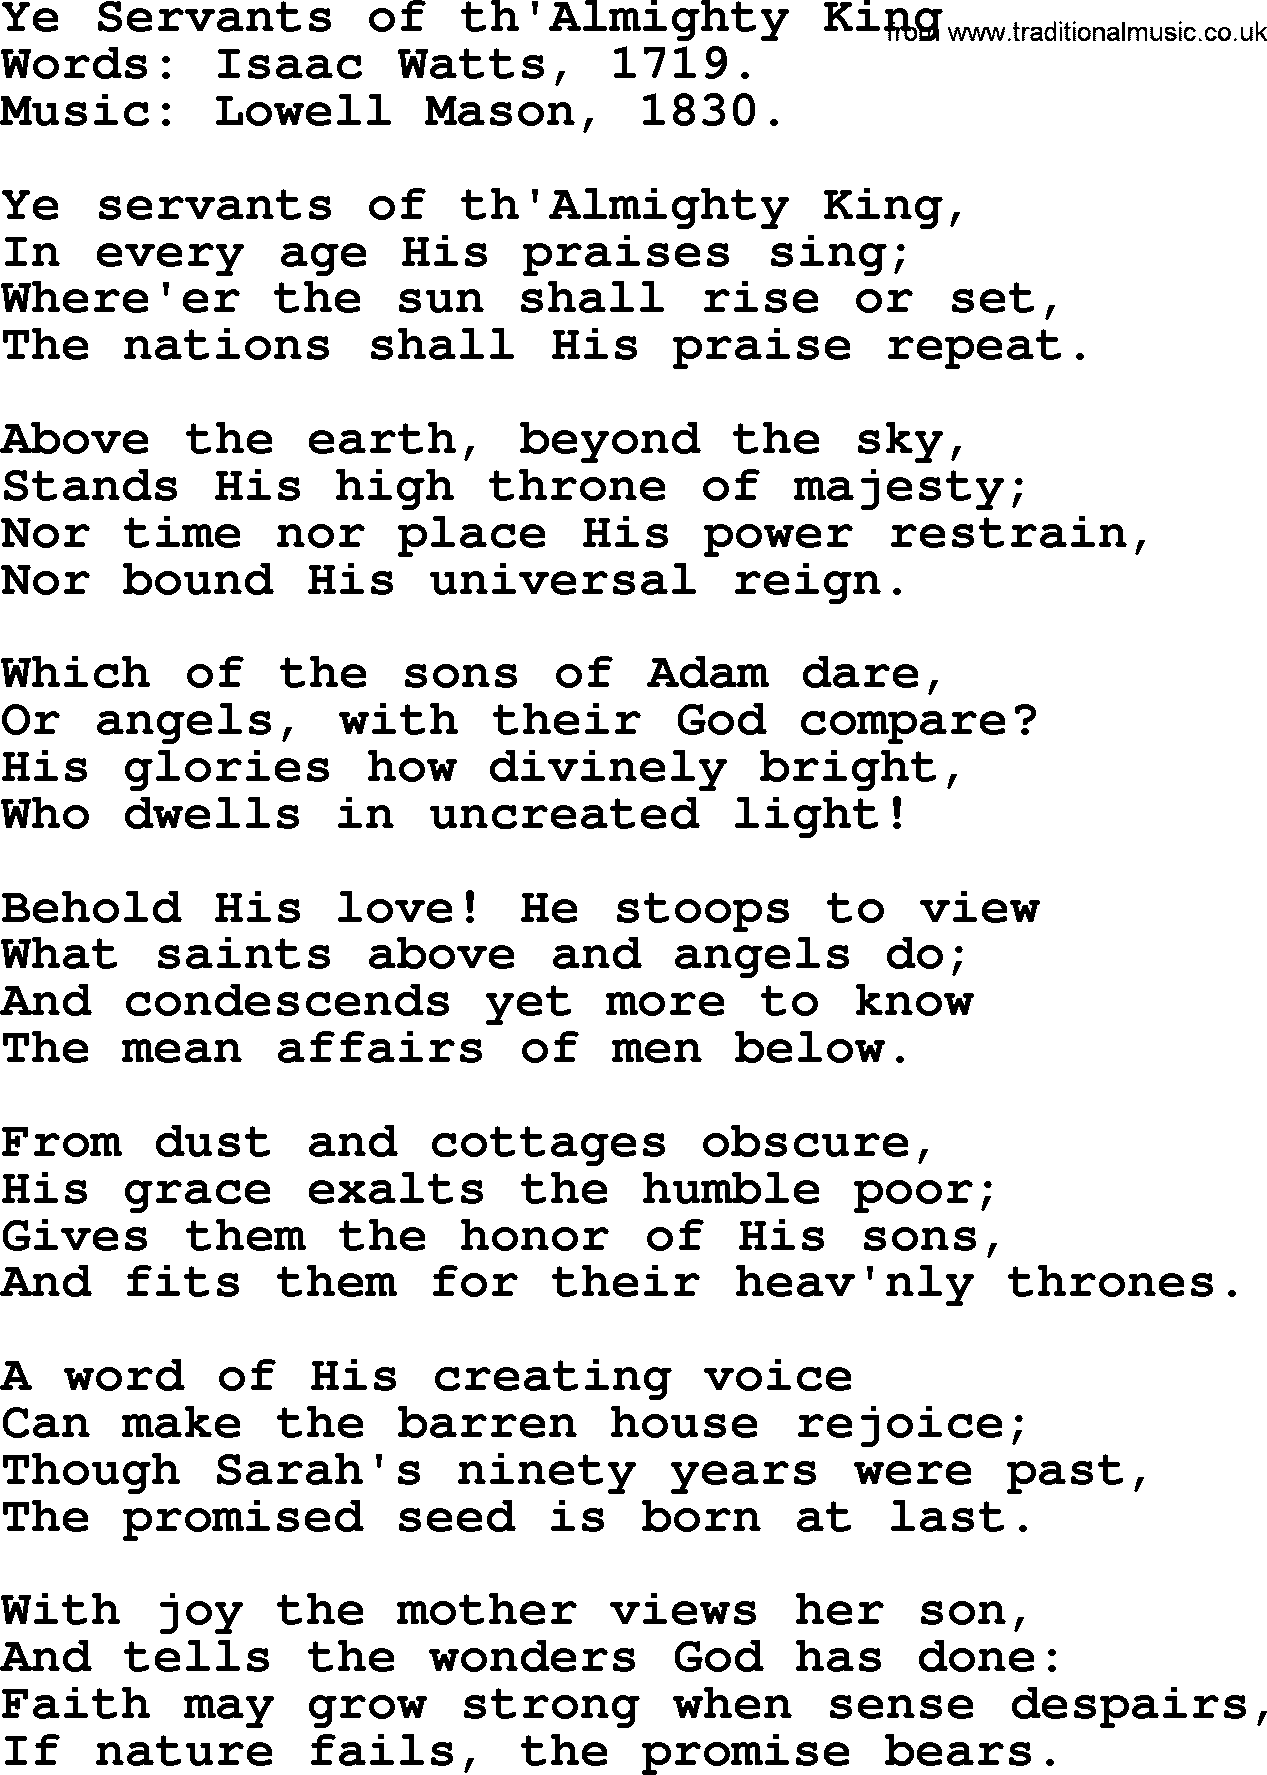 Isaac Watts Christian hymn: Ye Servants of th'Almighty King- lyricss